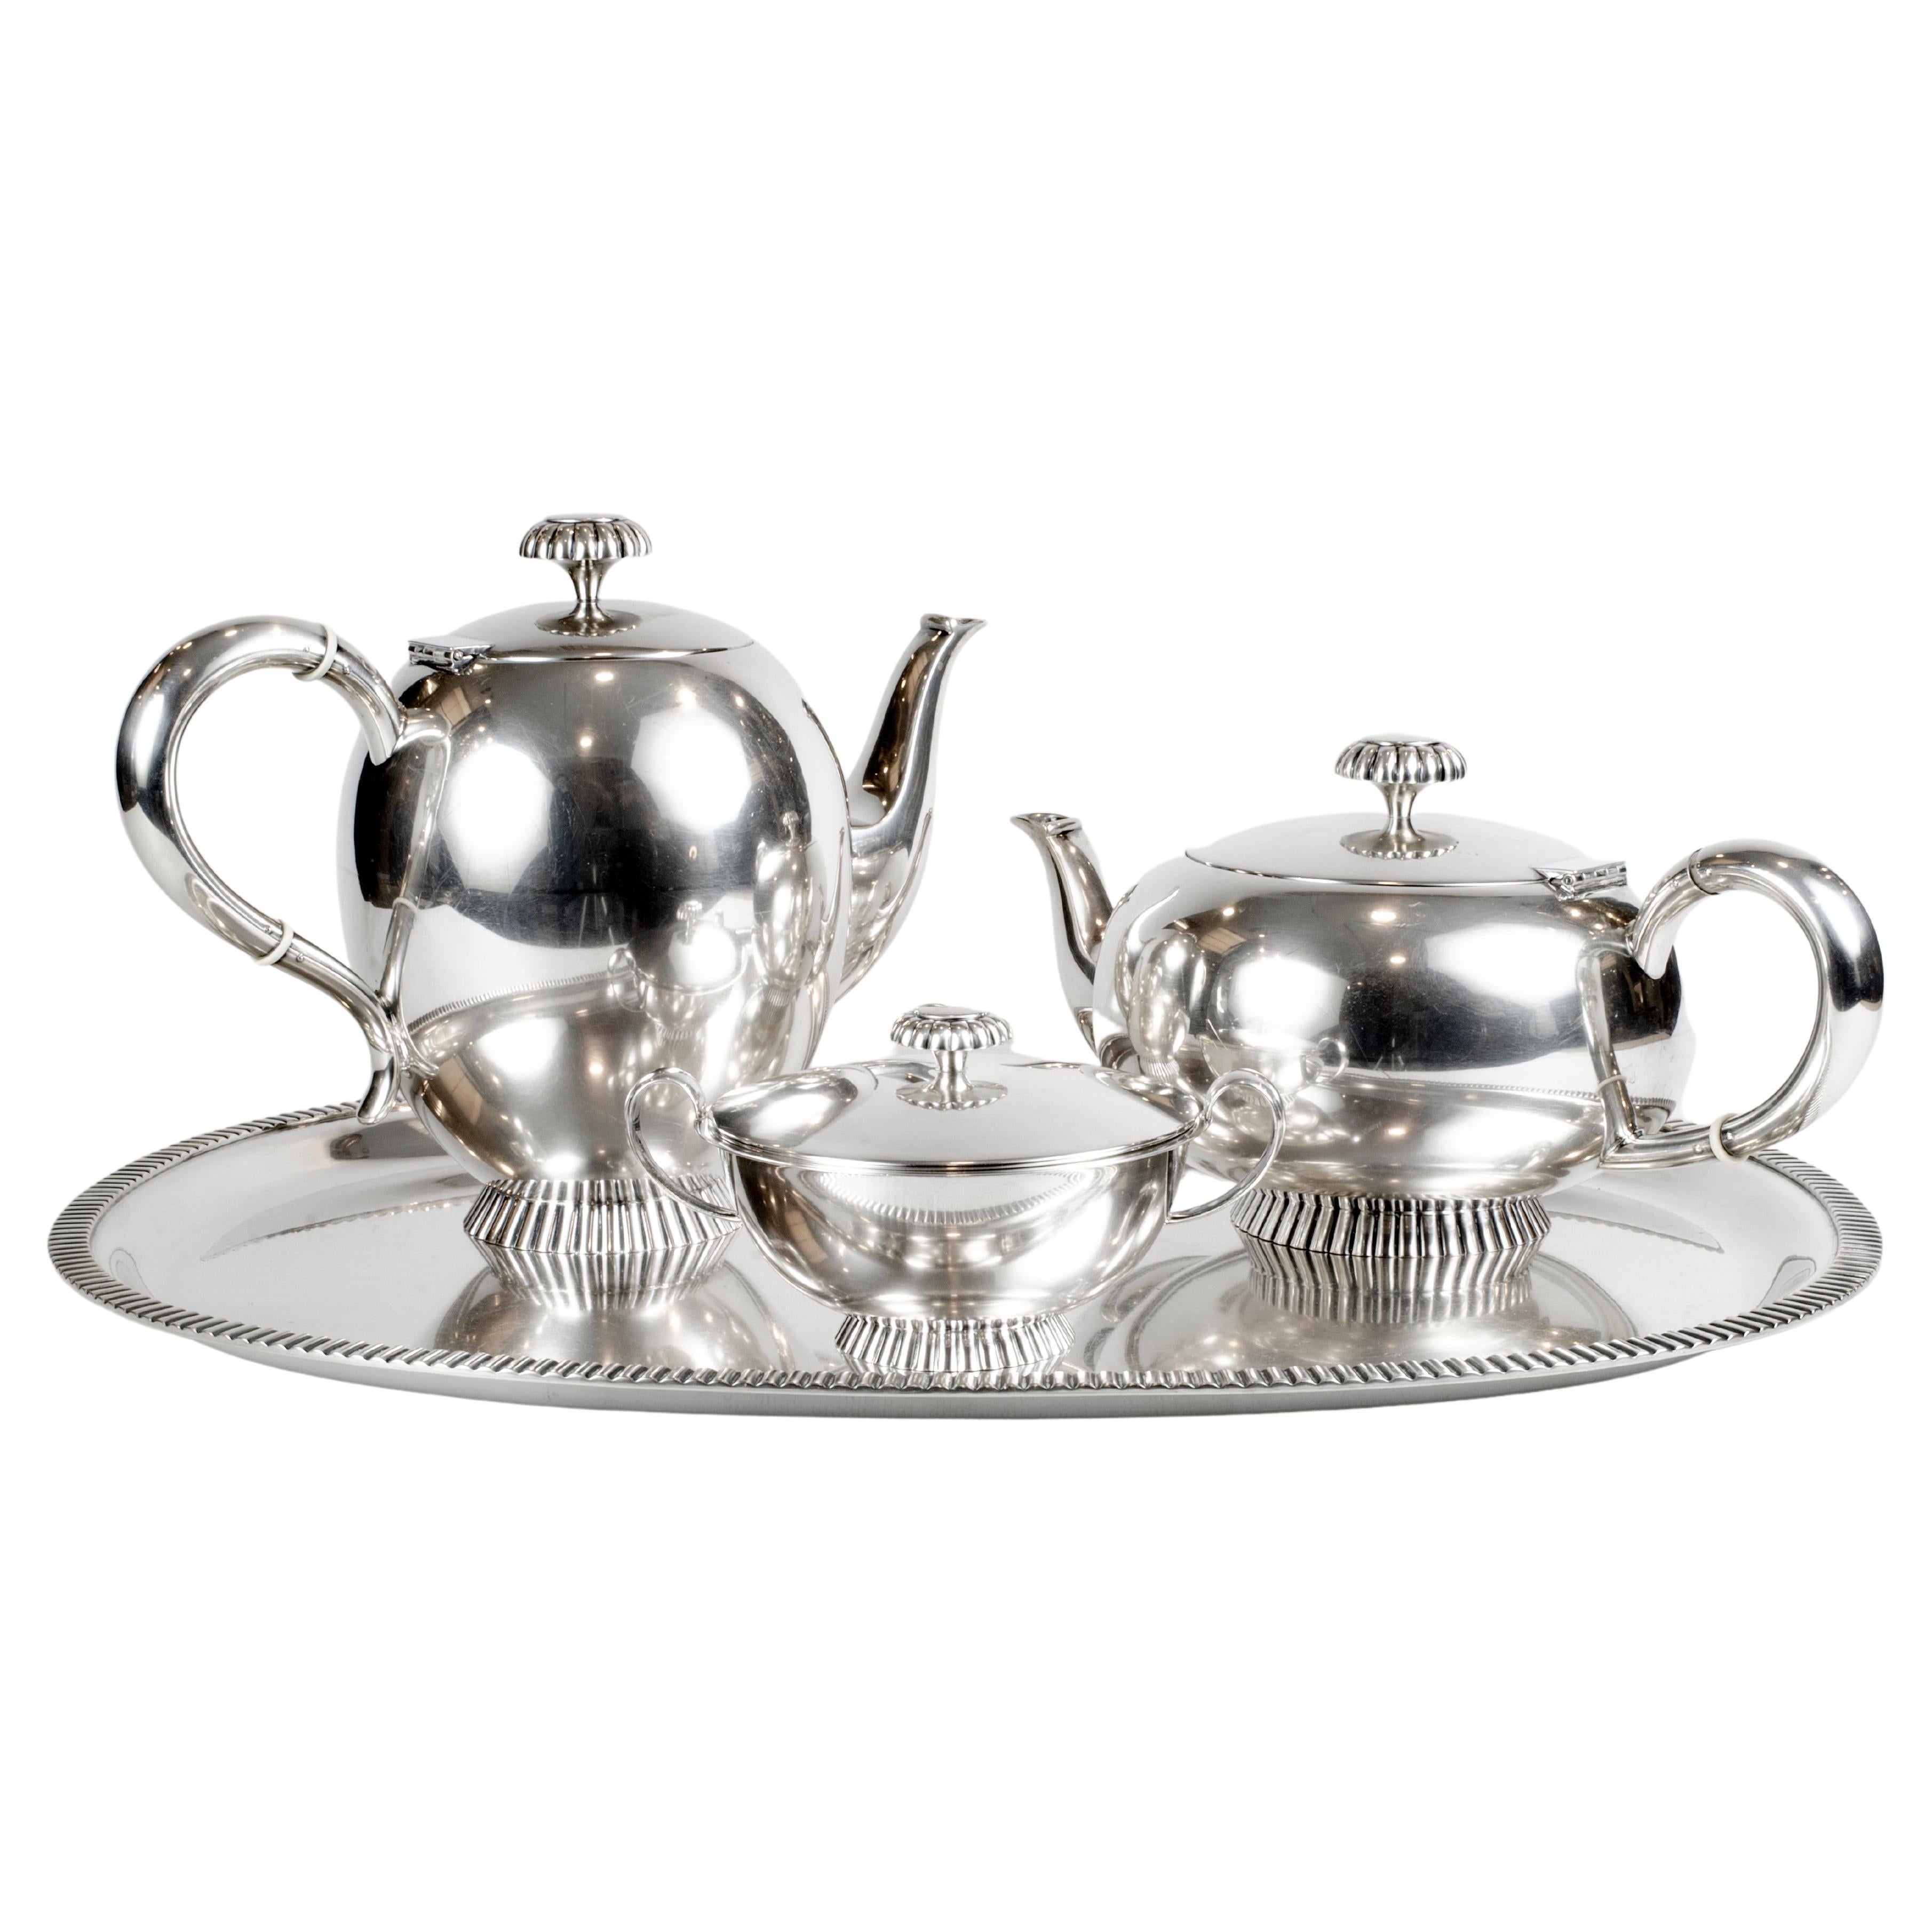 Wilkens silver art deco coffee and tea set